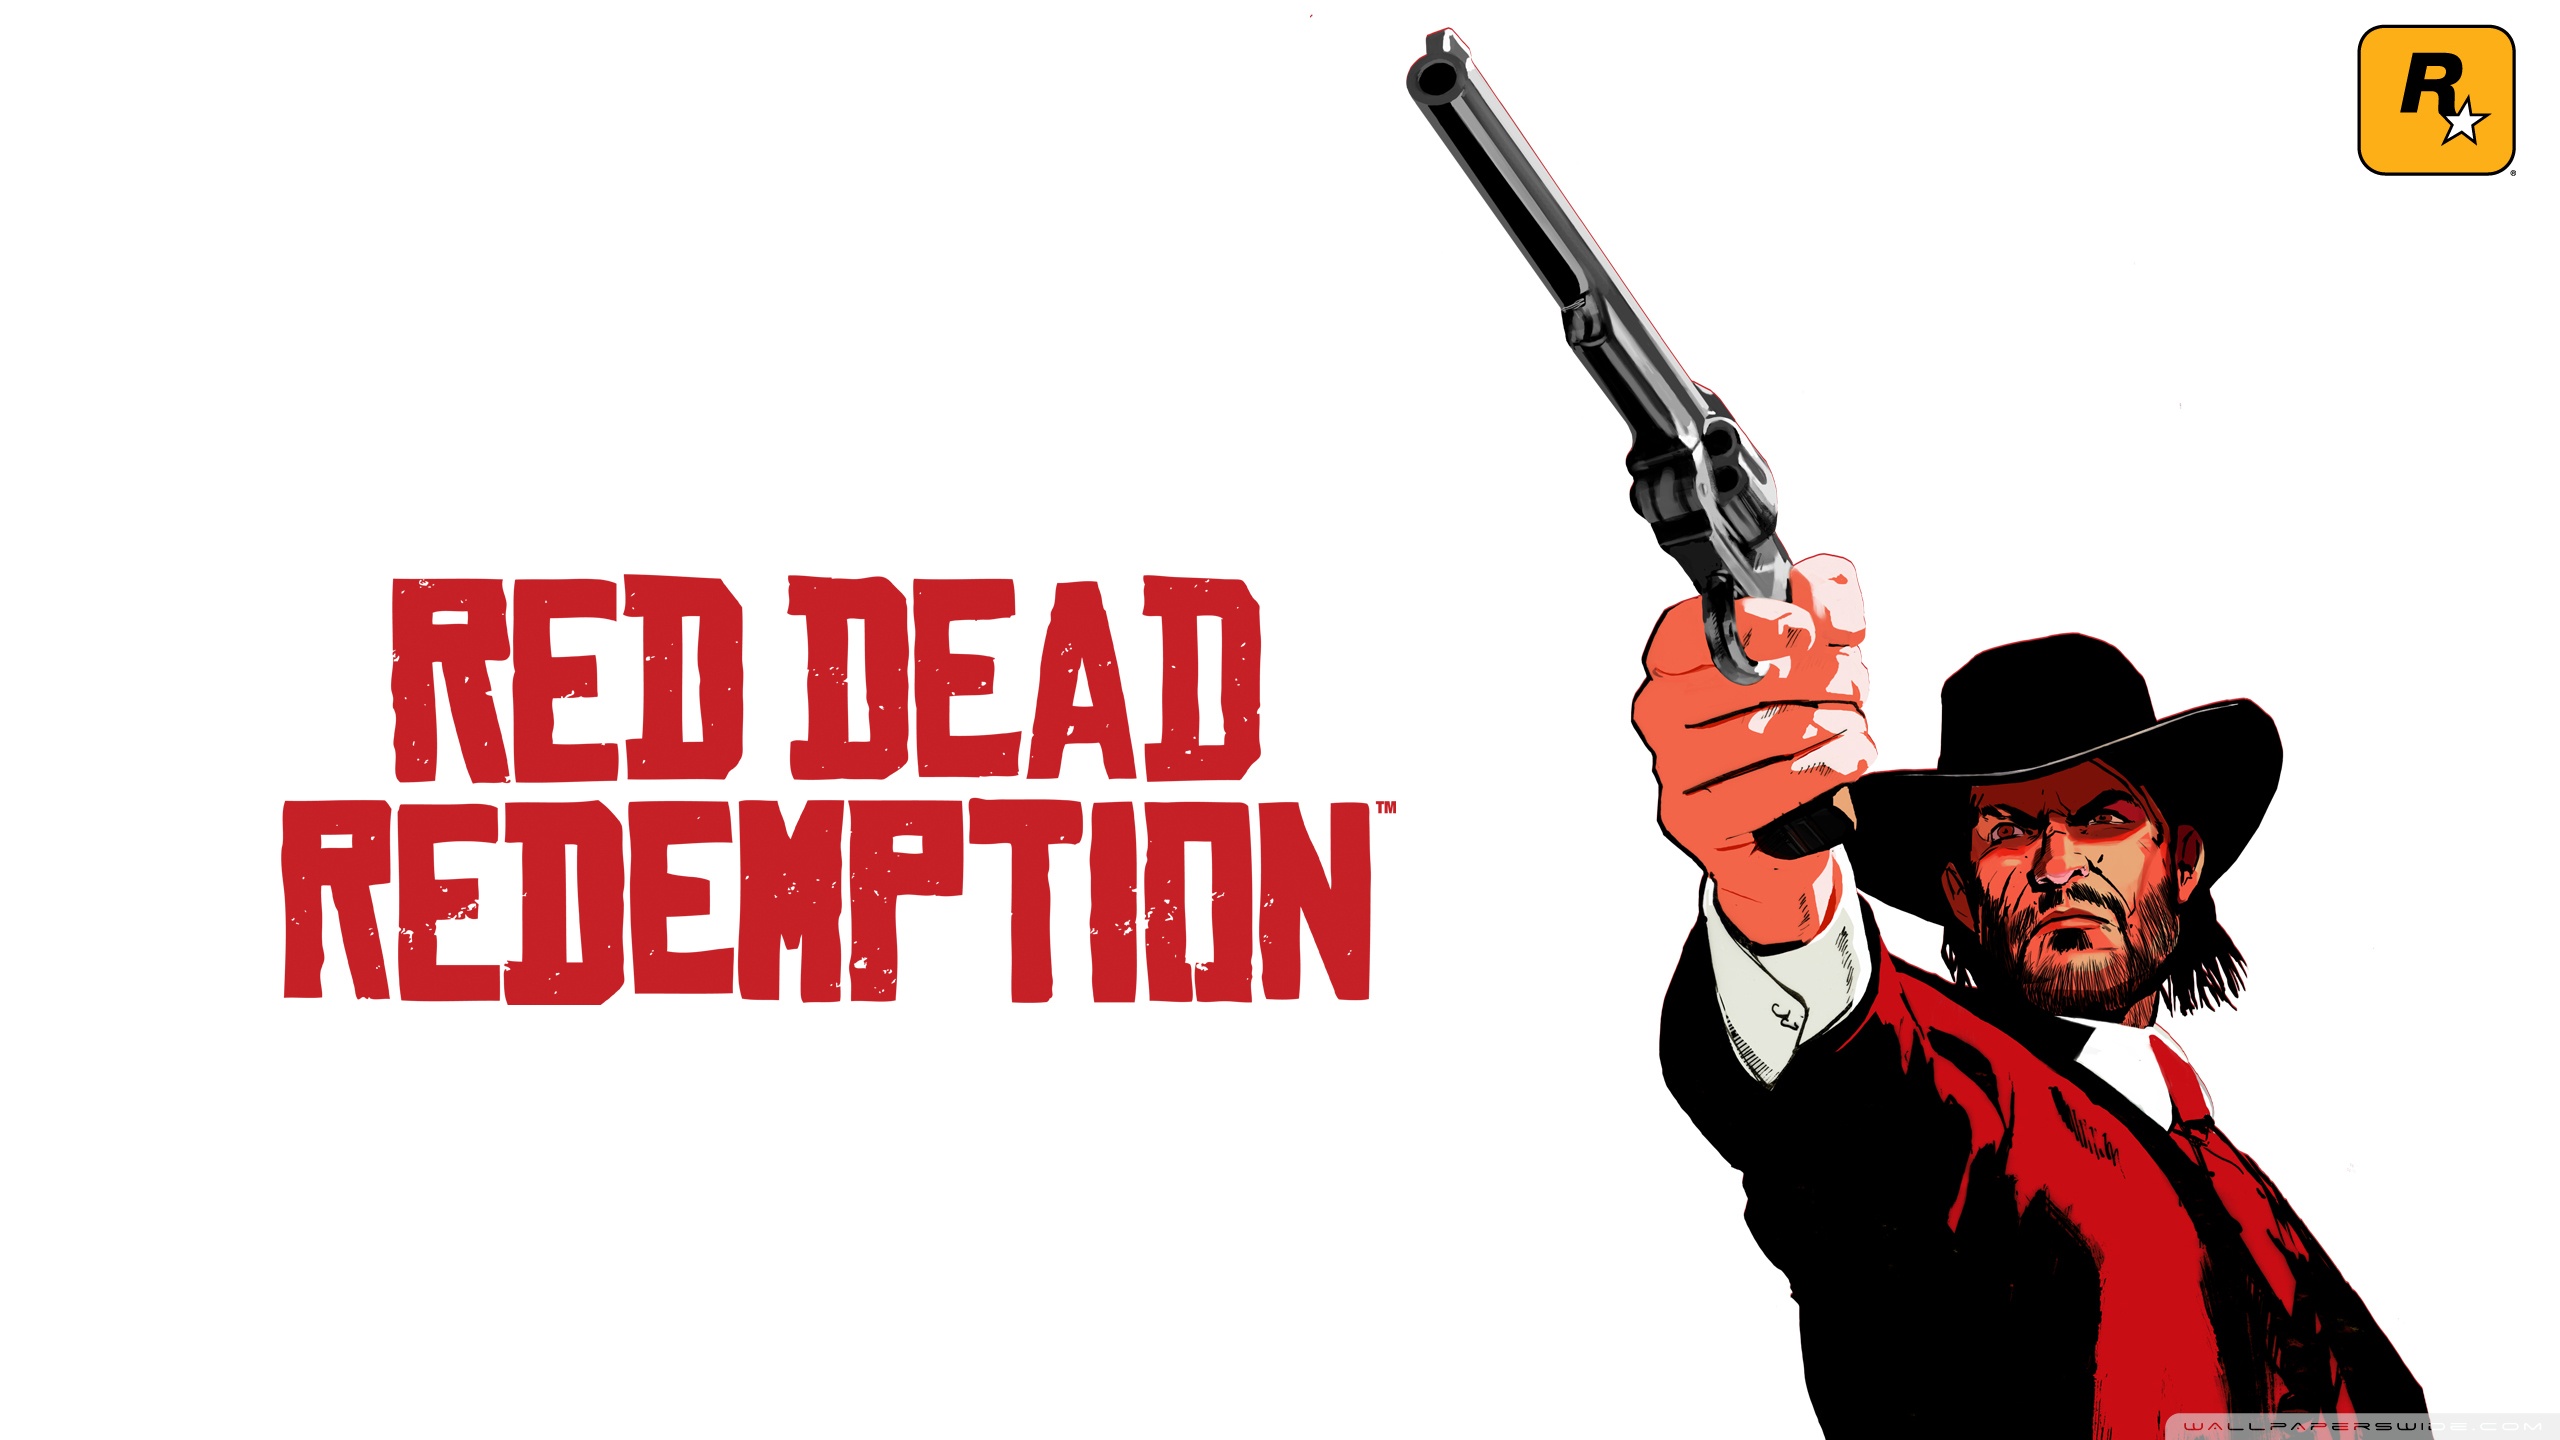 2560x1440] Red Dead Redemption : r/wallpaper